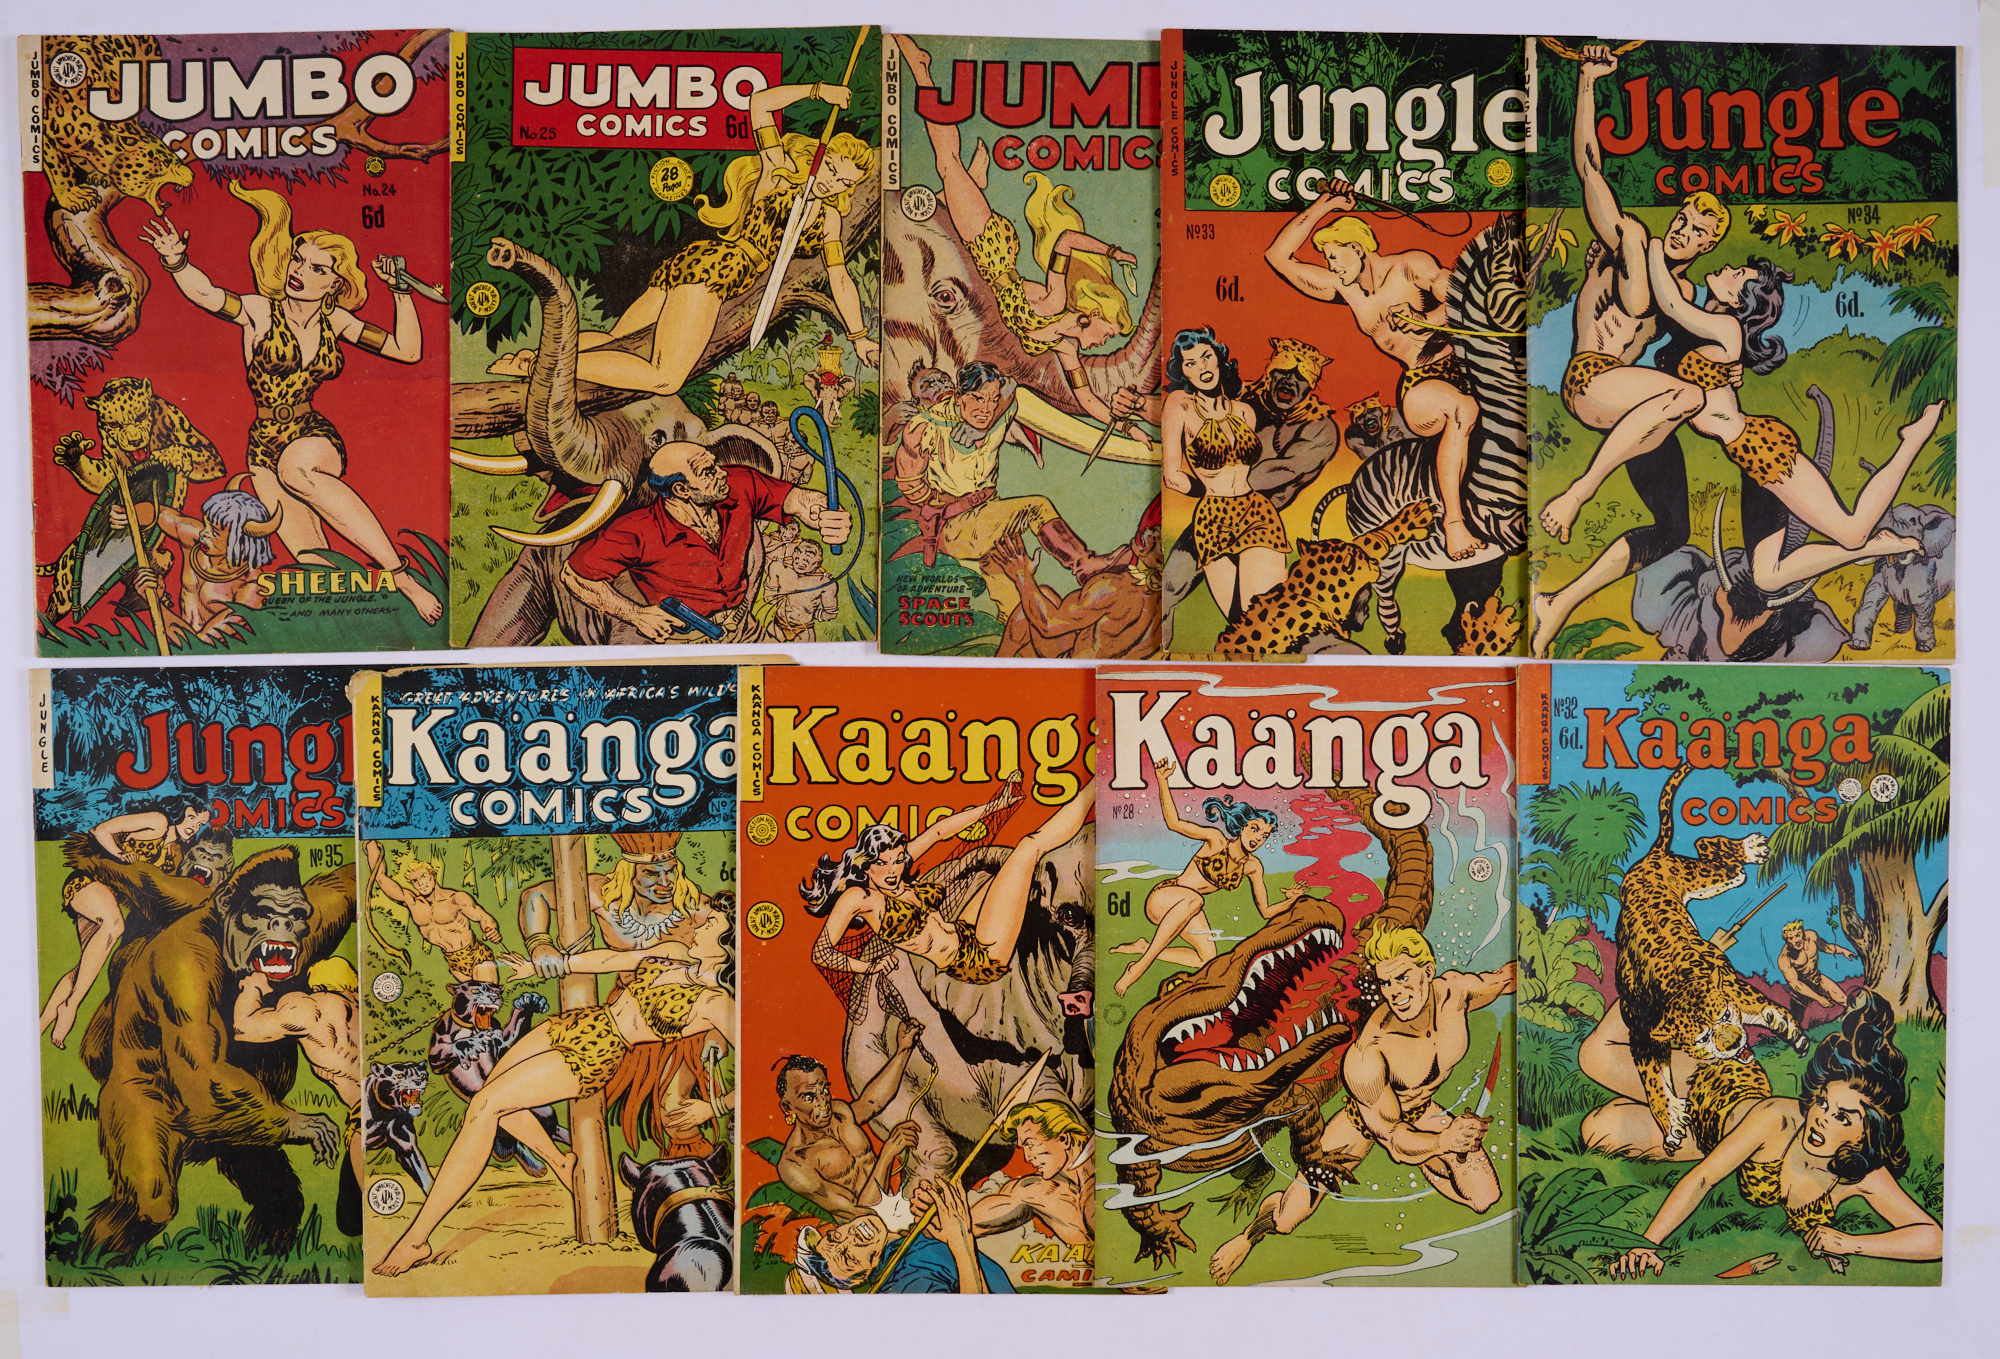 Jungle Australian reprints (1952-3, H. John Edwards, Sydney). Jumbo Comics 24, 25, 26, Jungle Comics